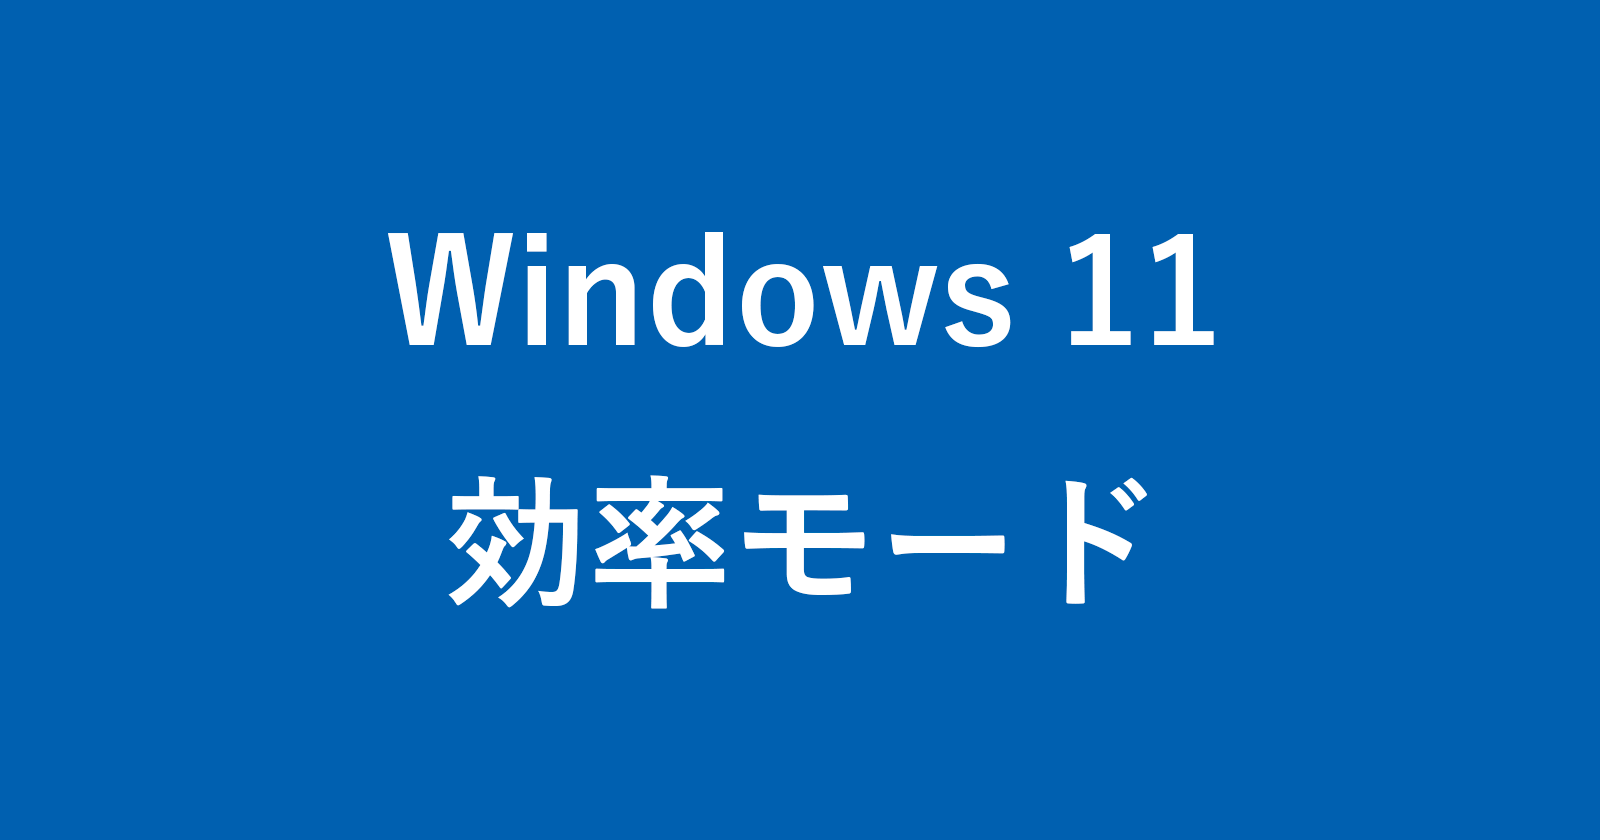 windows 11 efficiency mode